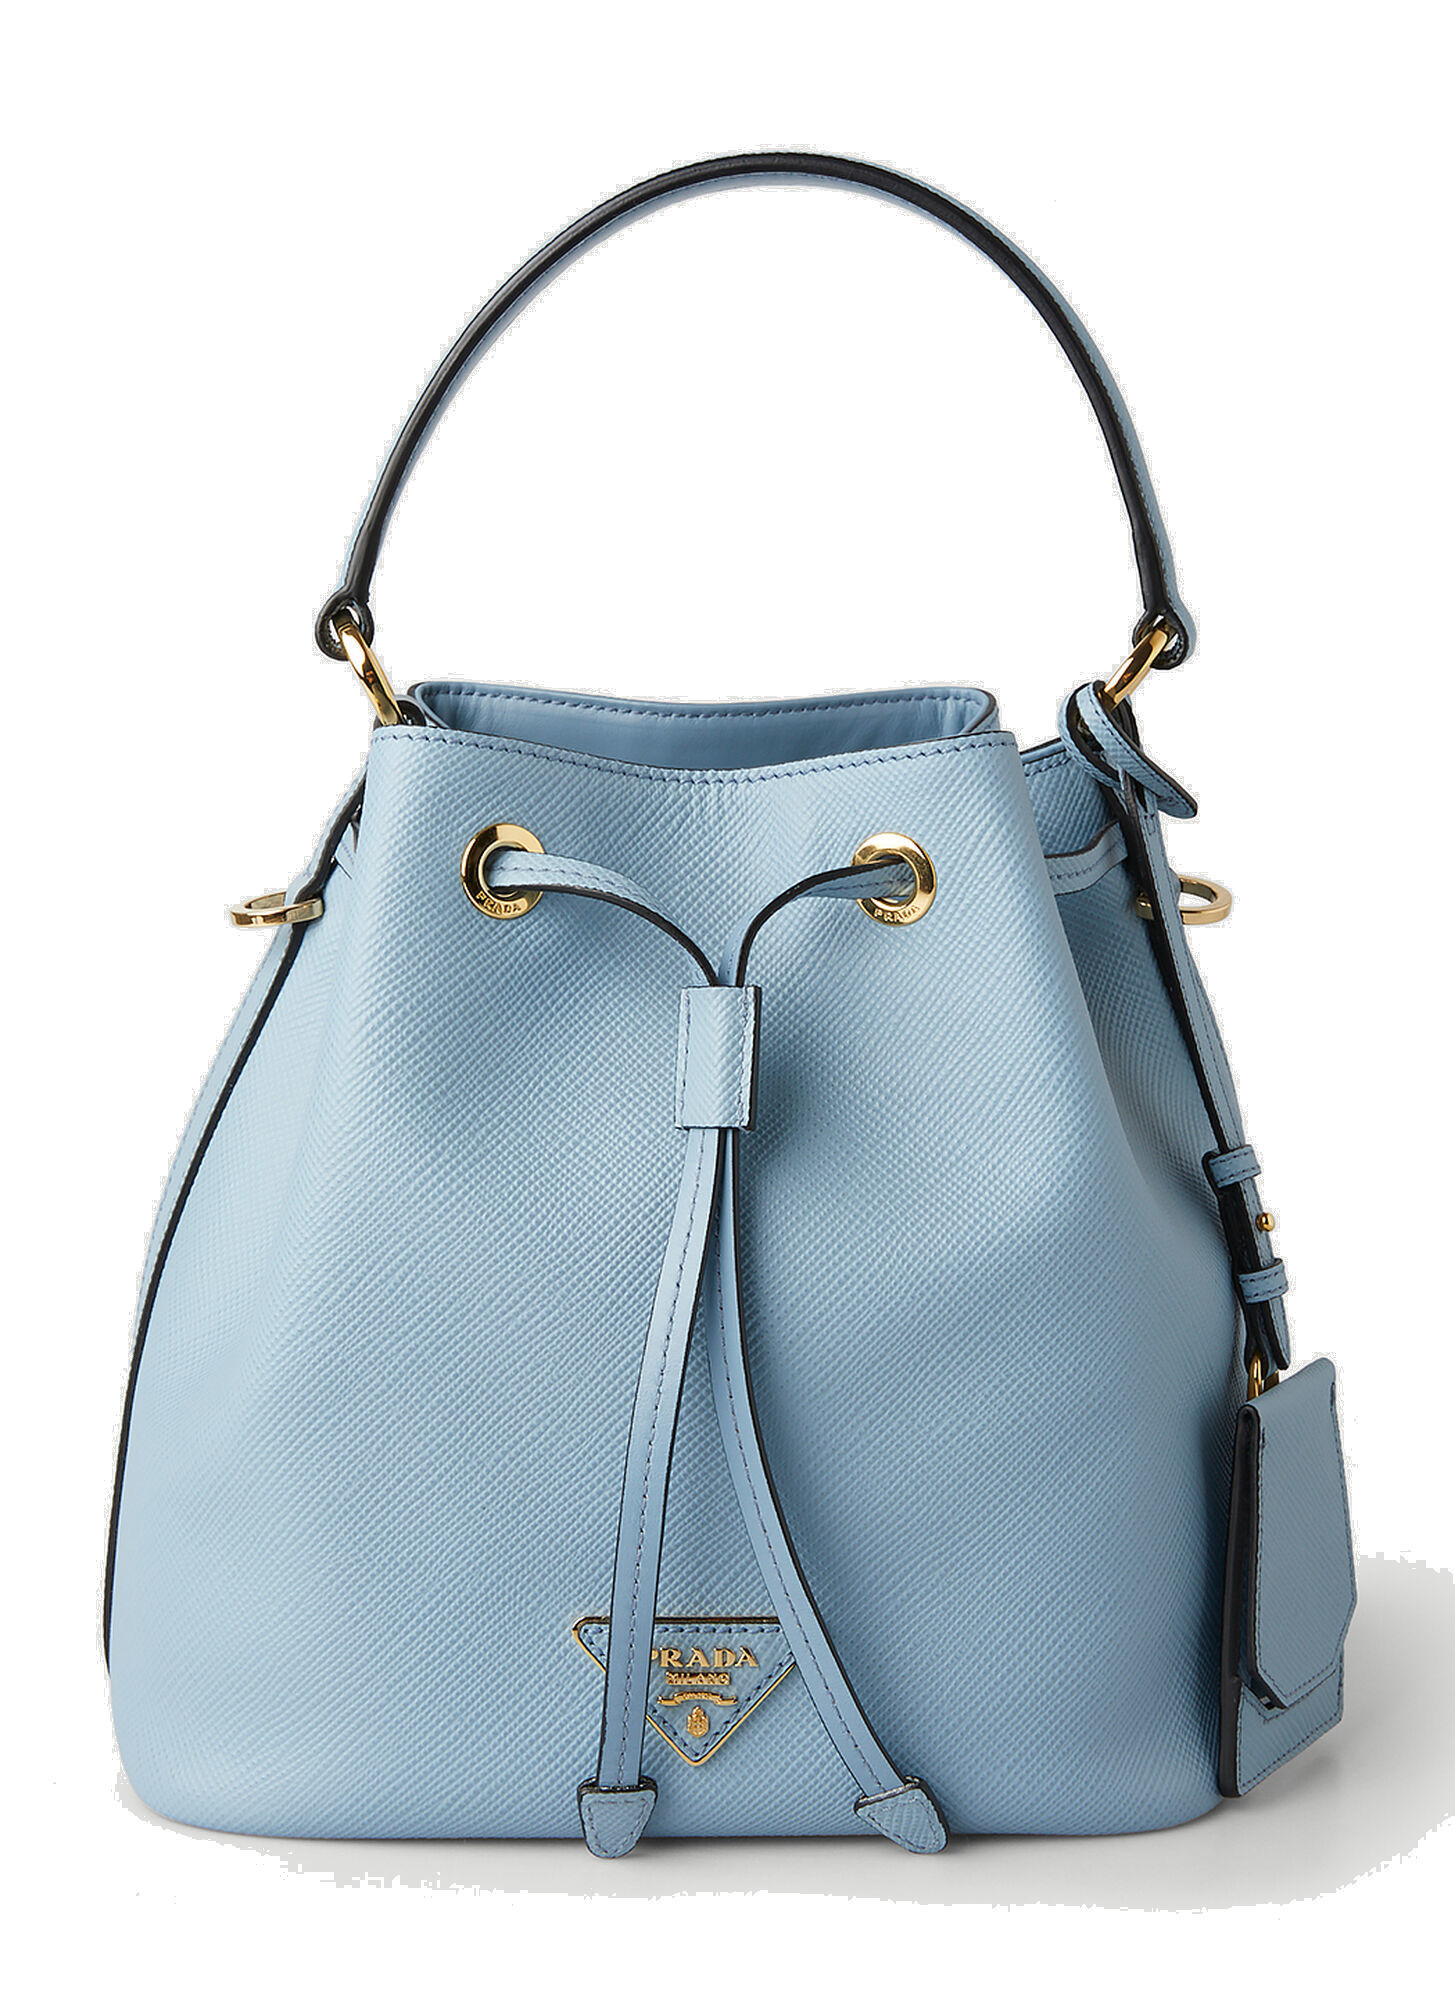 Saffiano Leather Bucket Bag in Blue Prada